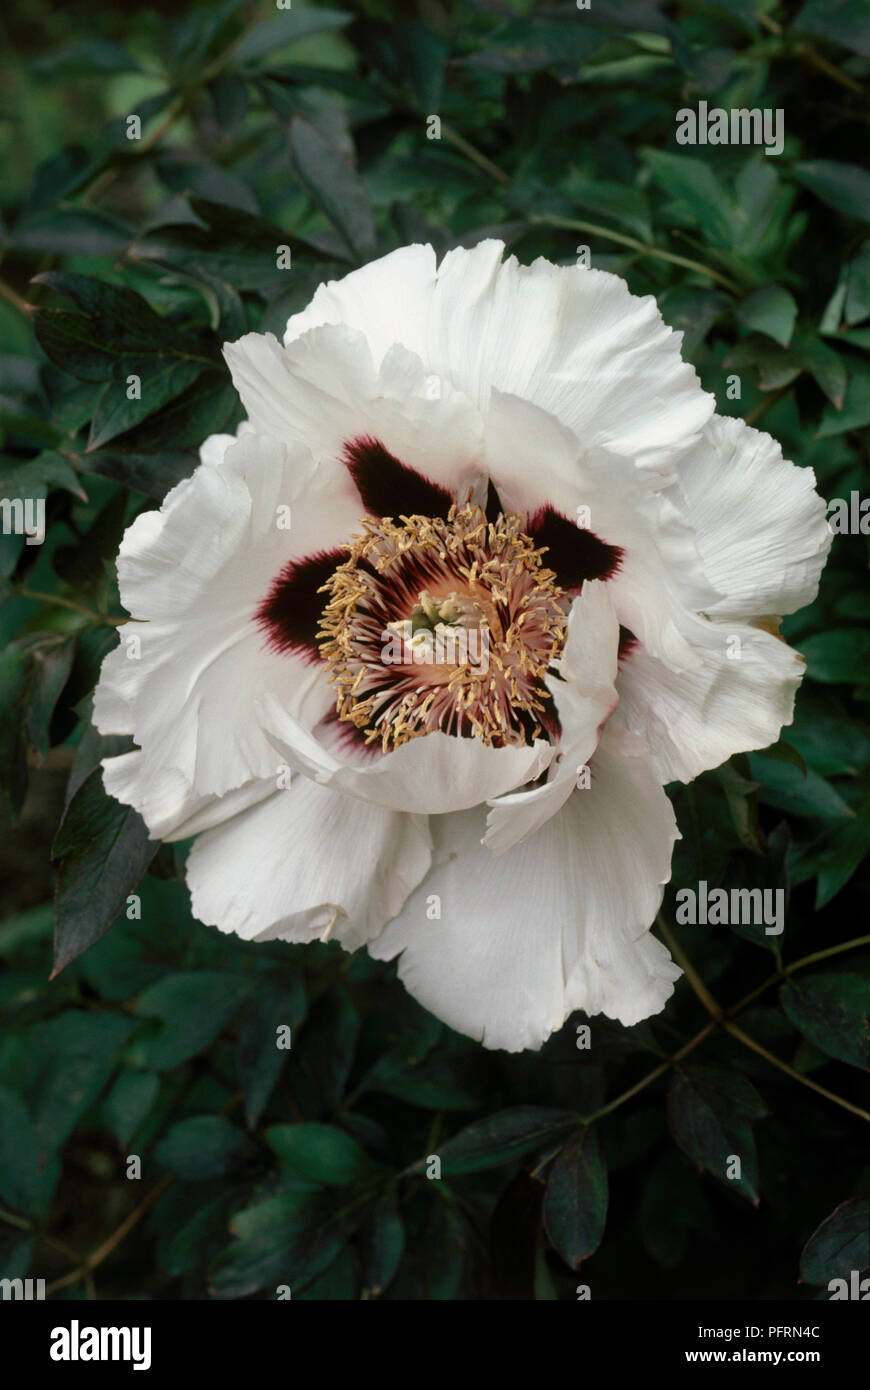 Paeonia sp. (Peony), white flower, close-up Stock Photo